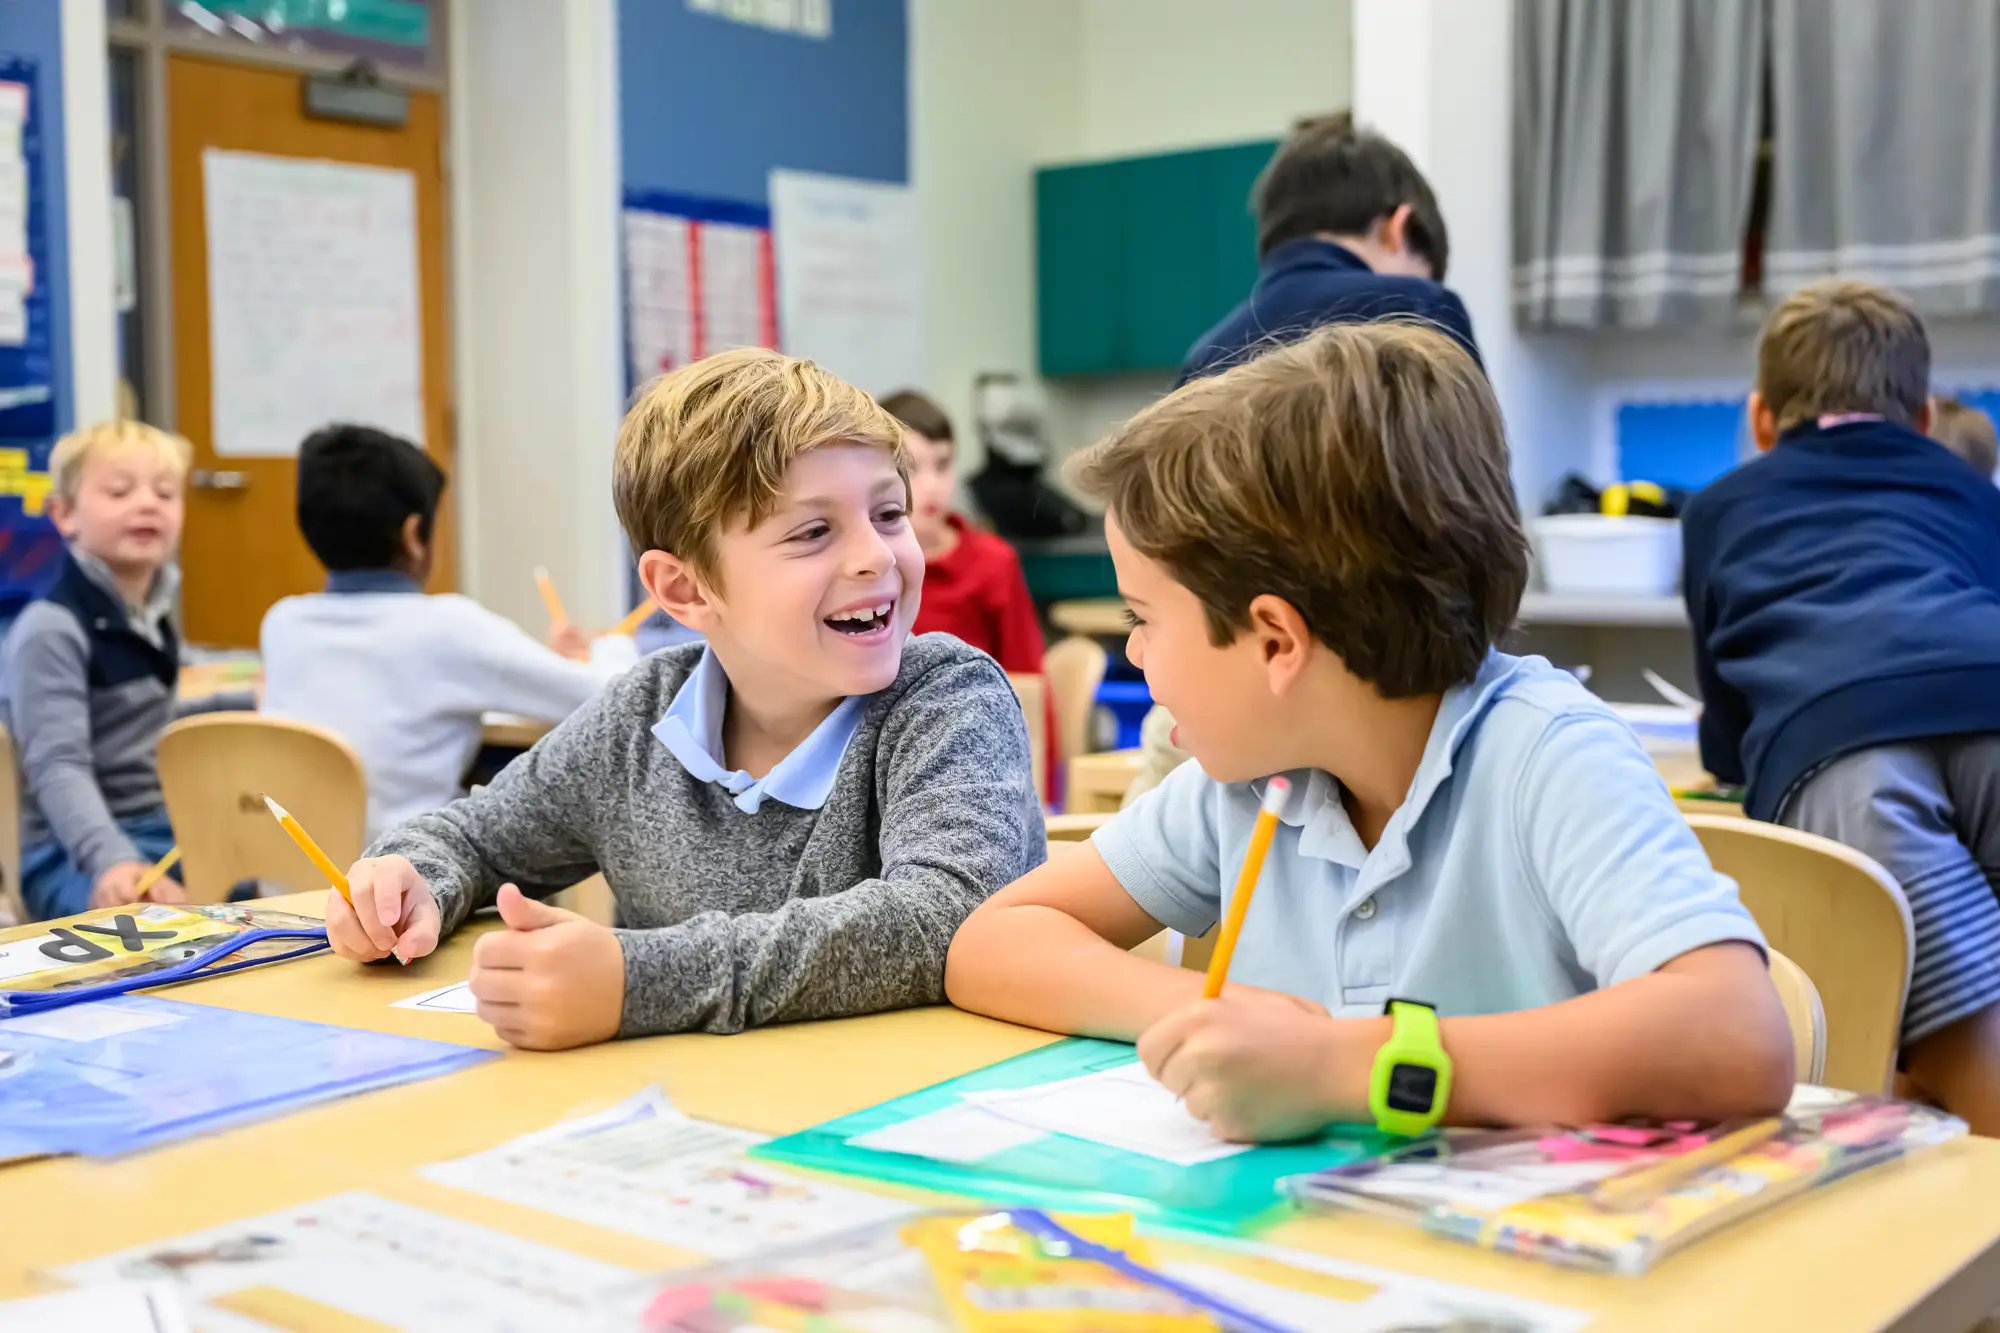 Two kindergarten boys talk during class